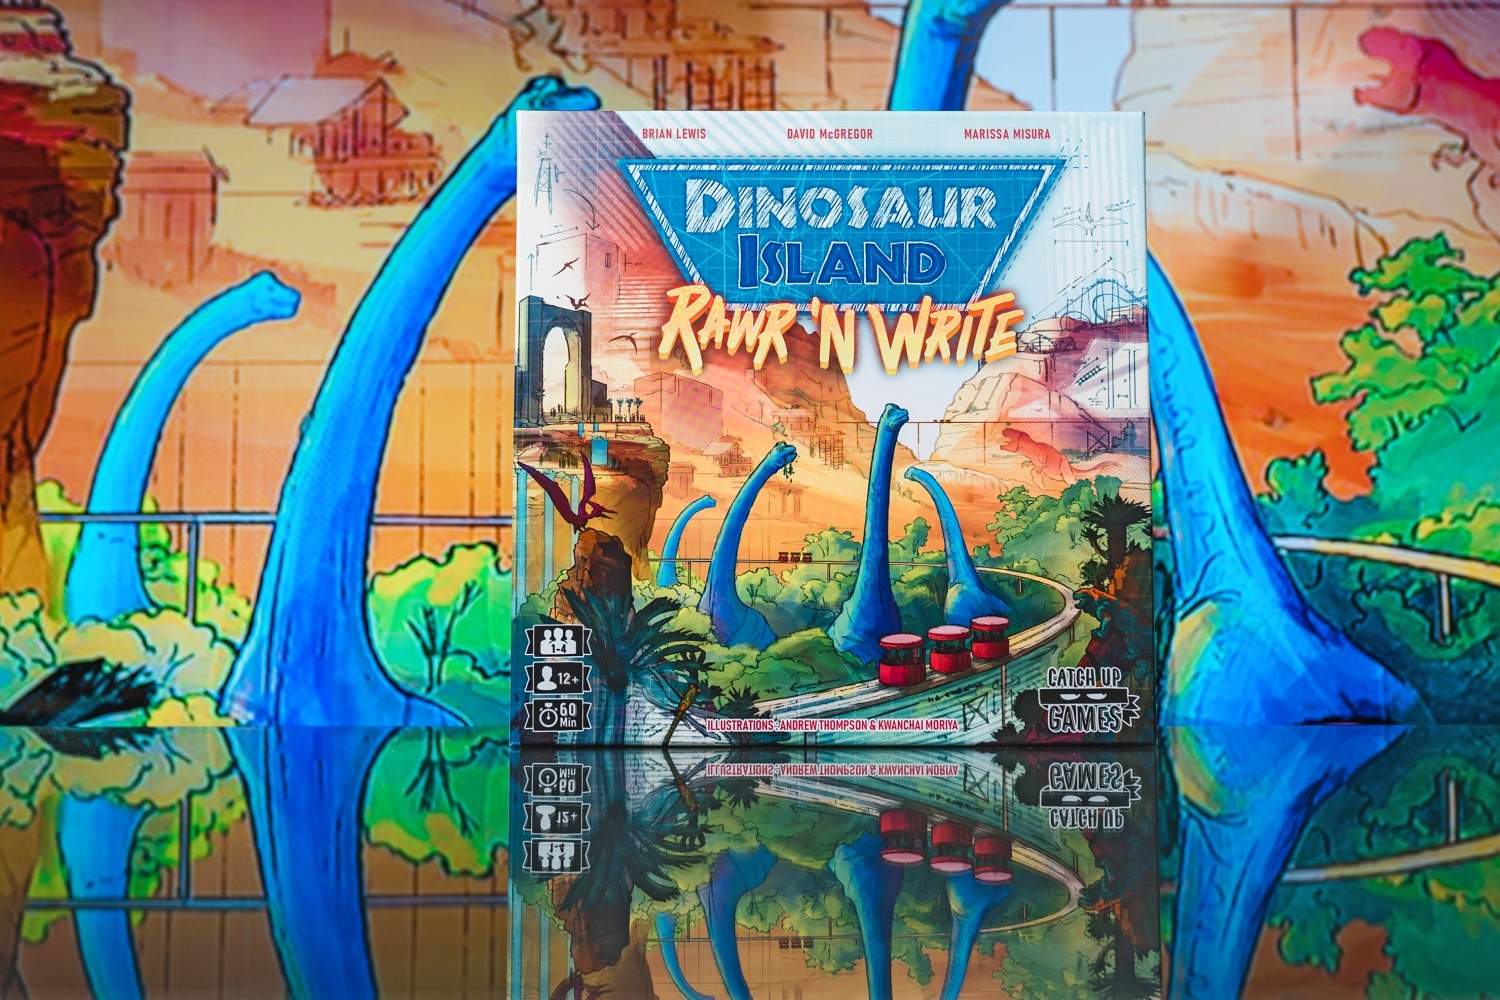 Dinosaur island rawr n write catch up games boardgame jeu de société 